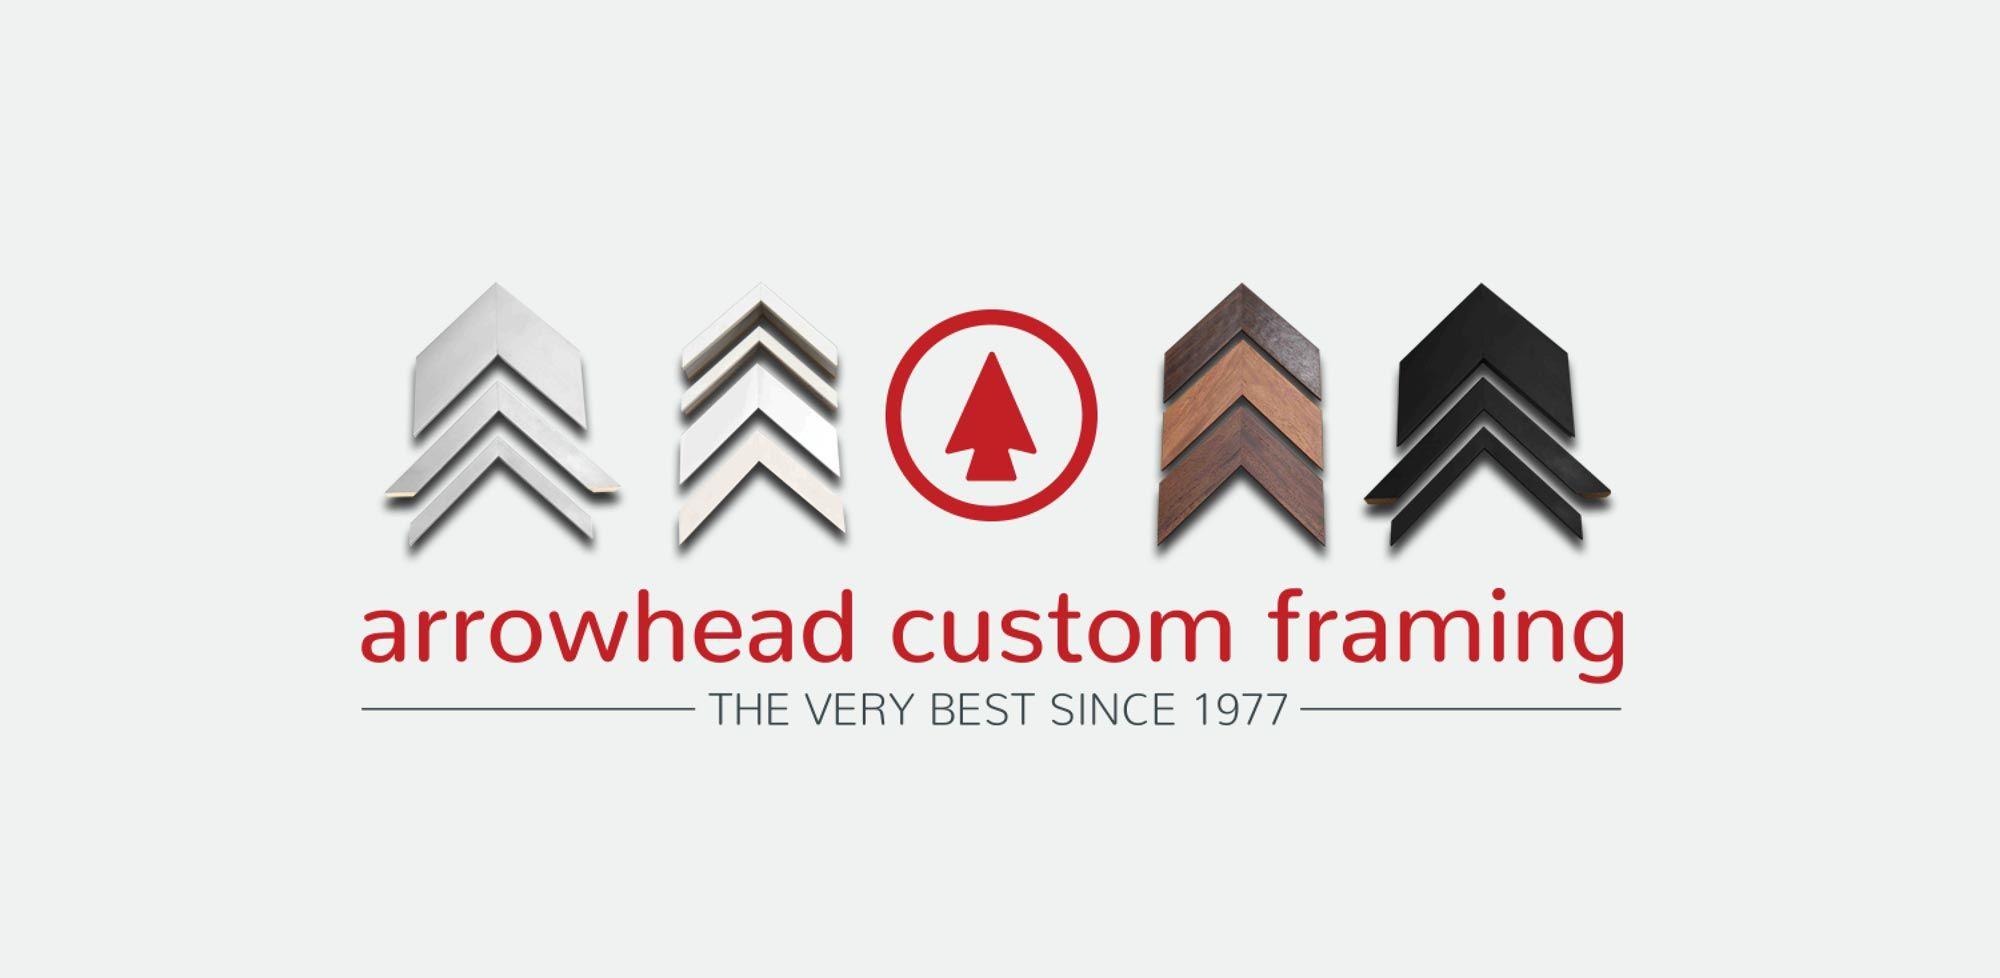 Framing Logo - Custom Framing and More for Your Art. Arrowhead Custom Framing